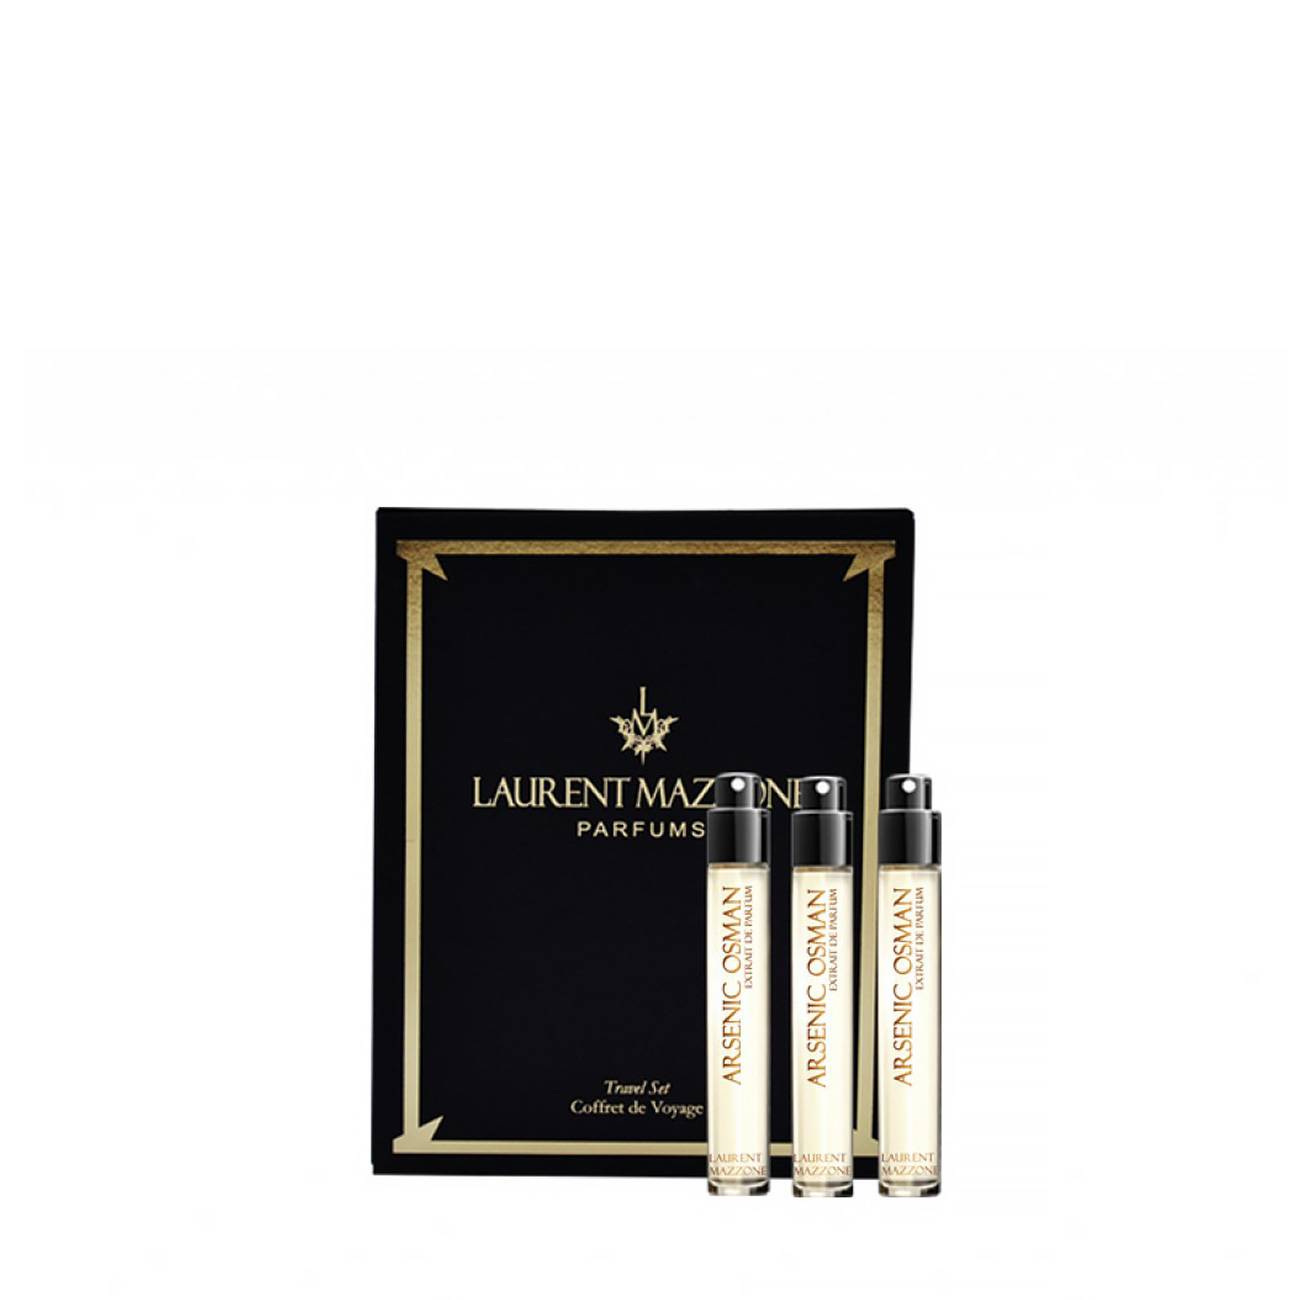 Parfum de niche Laurent Mazzone ARSENIC OSMAN TRAVEL SET 45ml cu comanda online